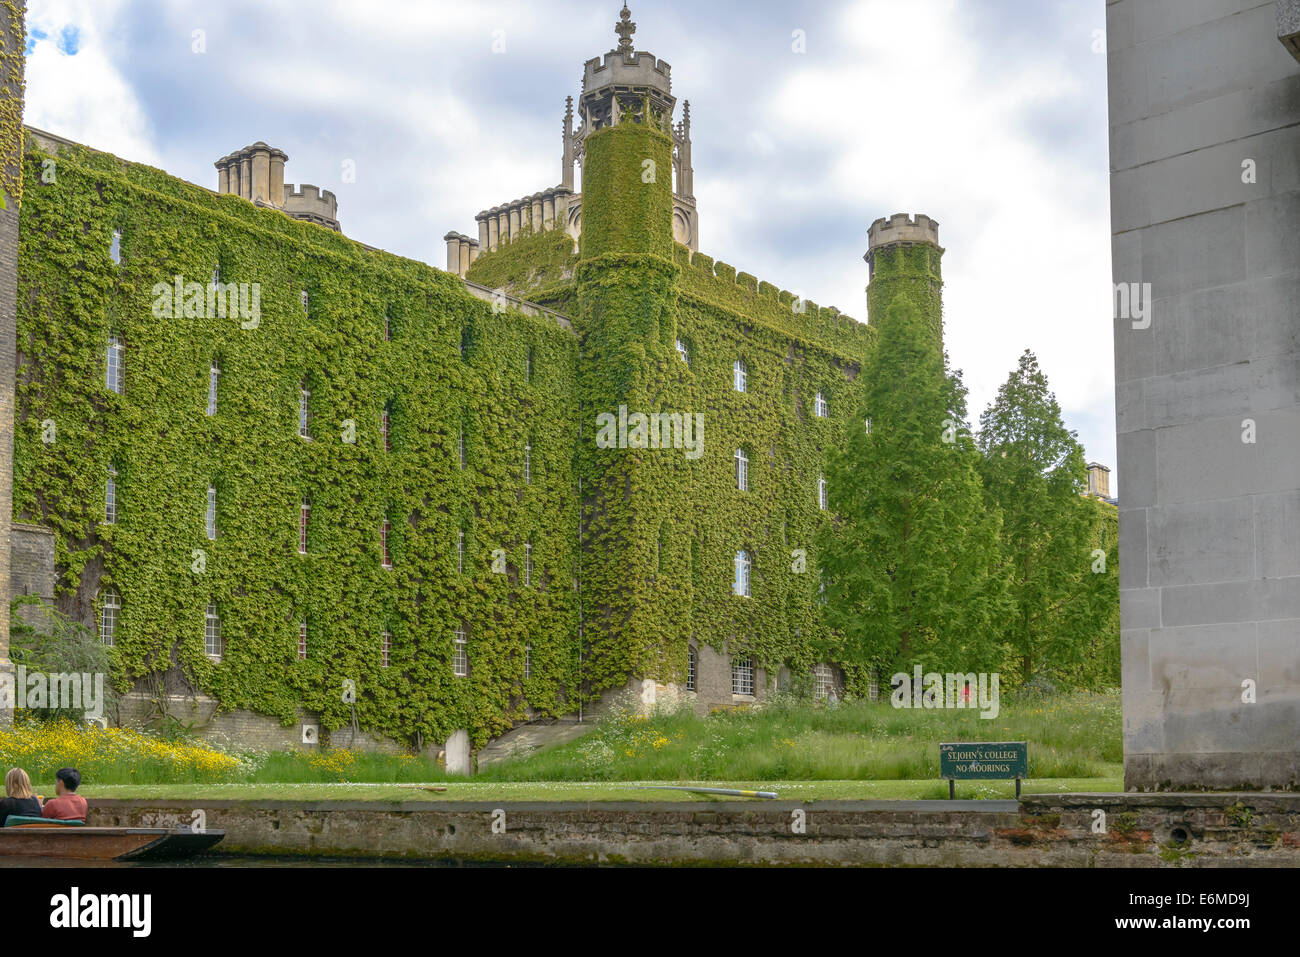 St. John's College at Cambridge University, England. Stock Photo